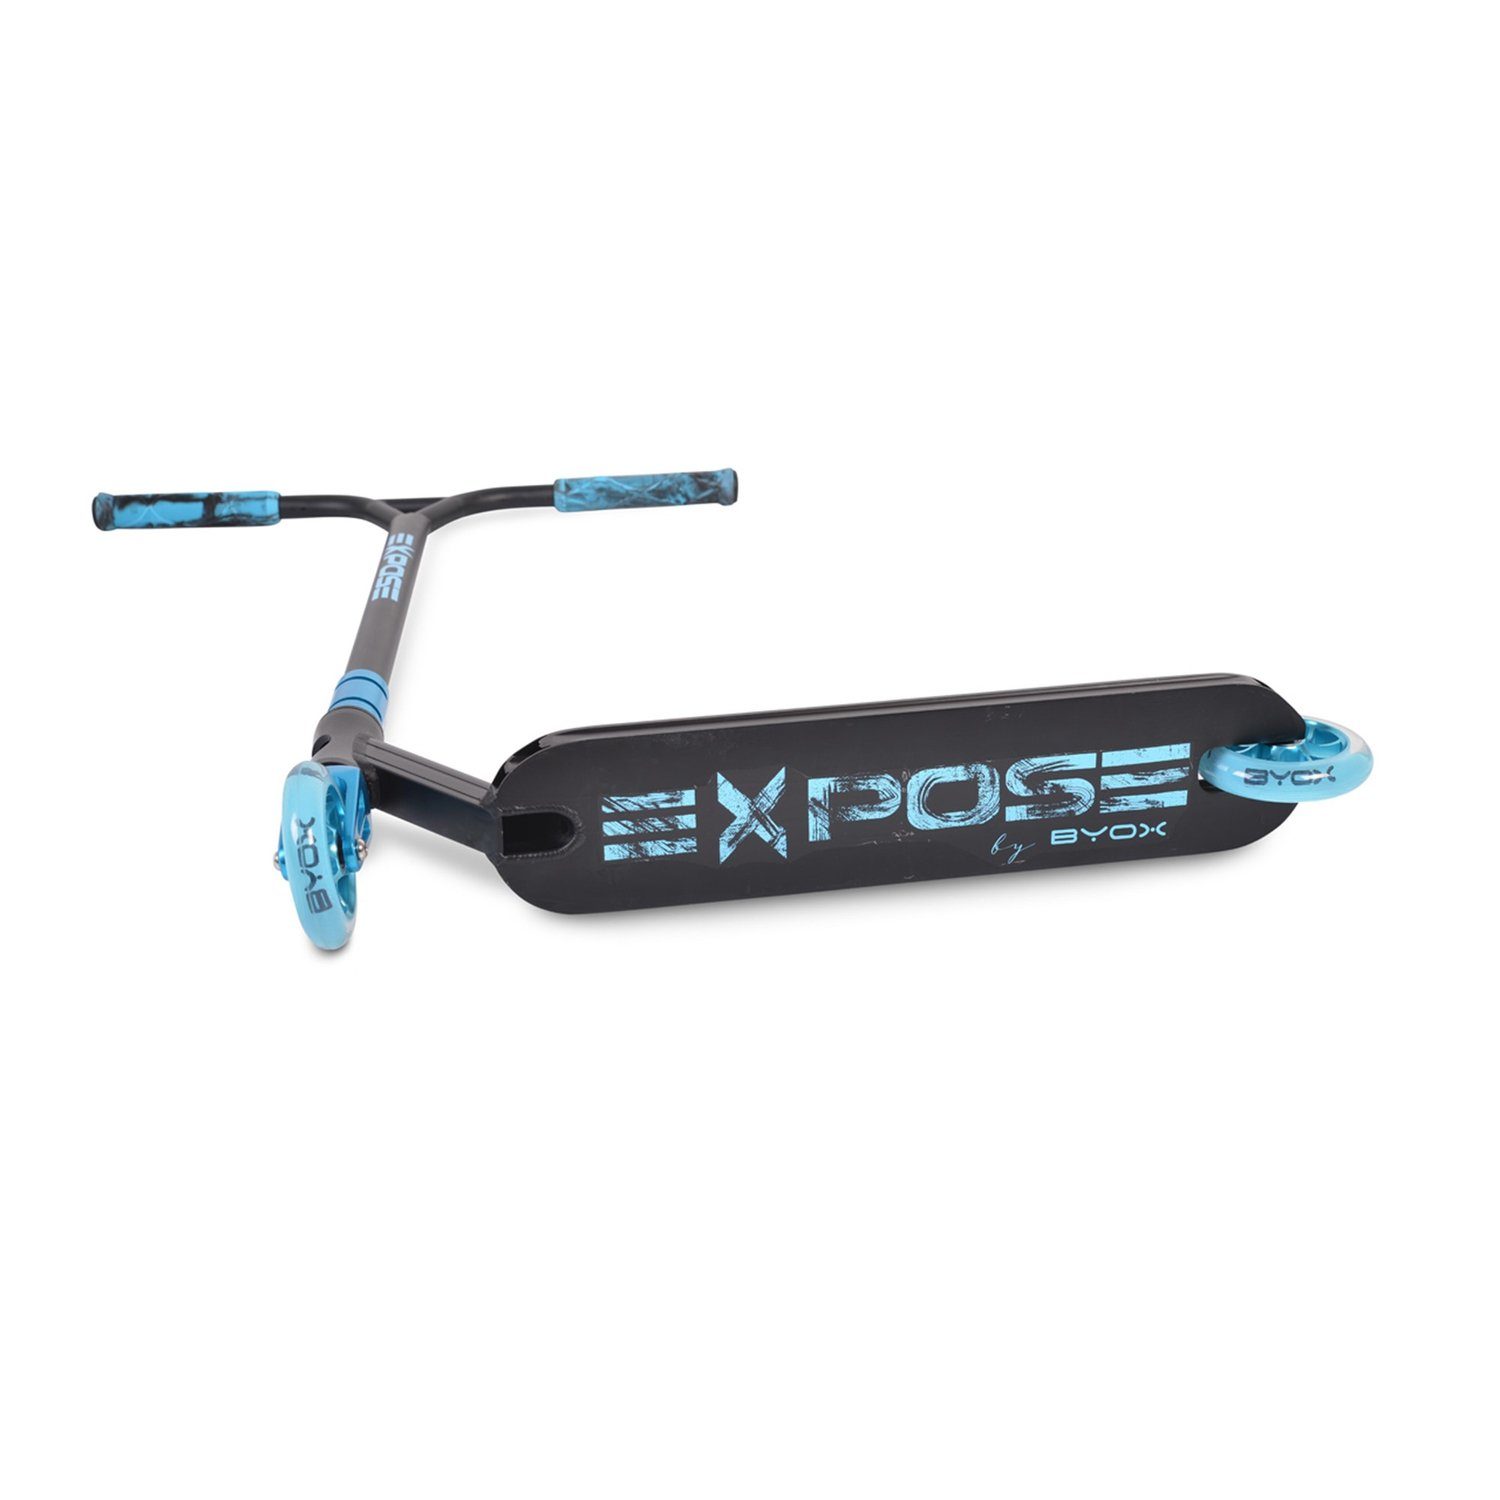 Scooter Aluminium Byox ab aus 10 Stunt Expose, ABEC-9 Jahren, PU-Räder, Cityroller blau Lager,